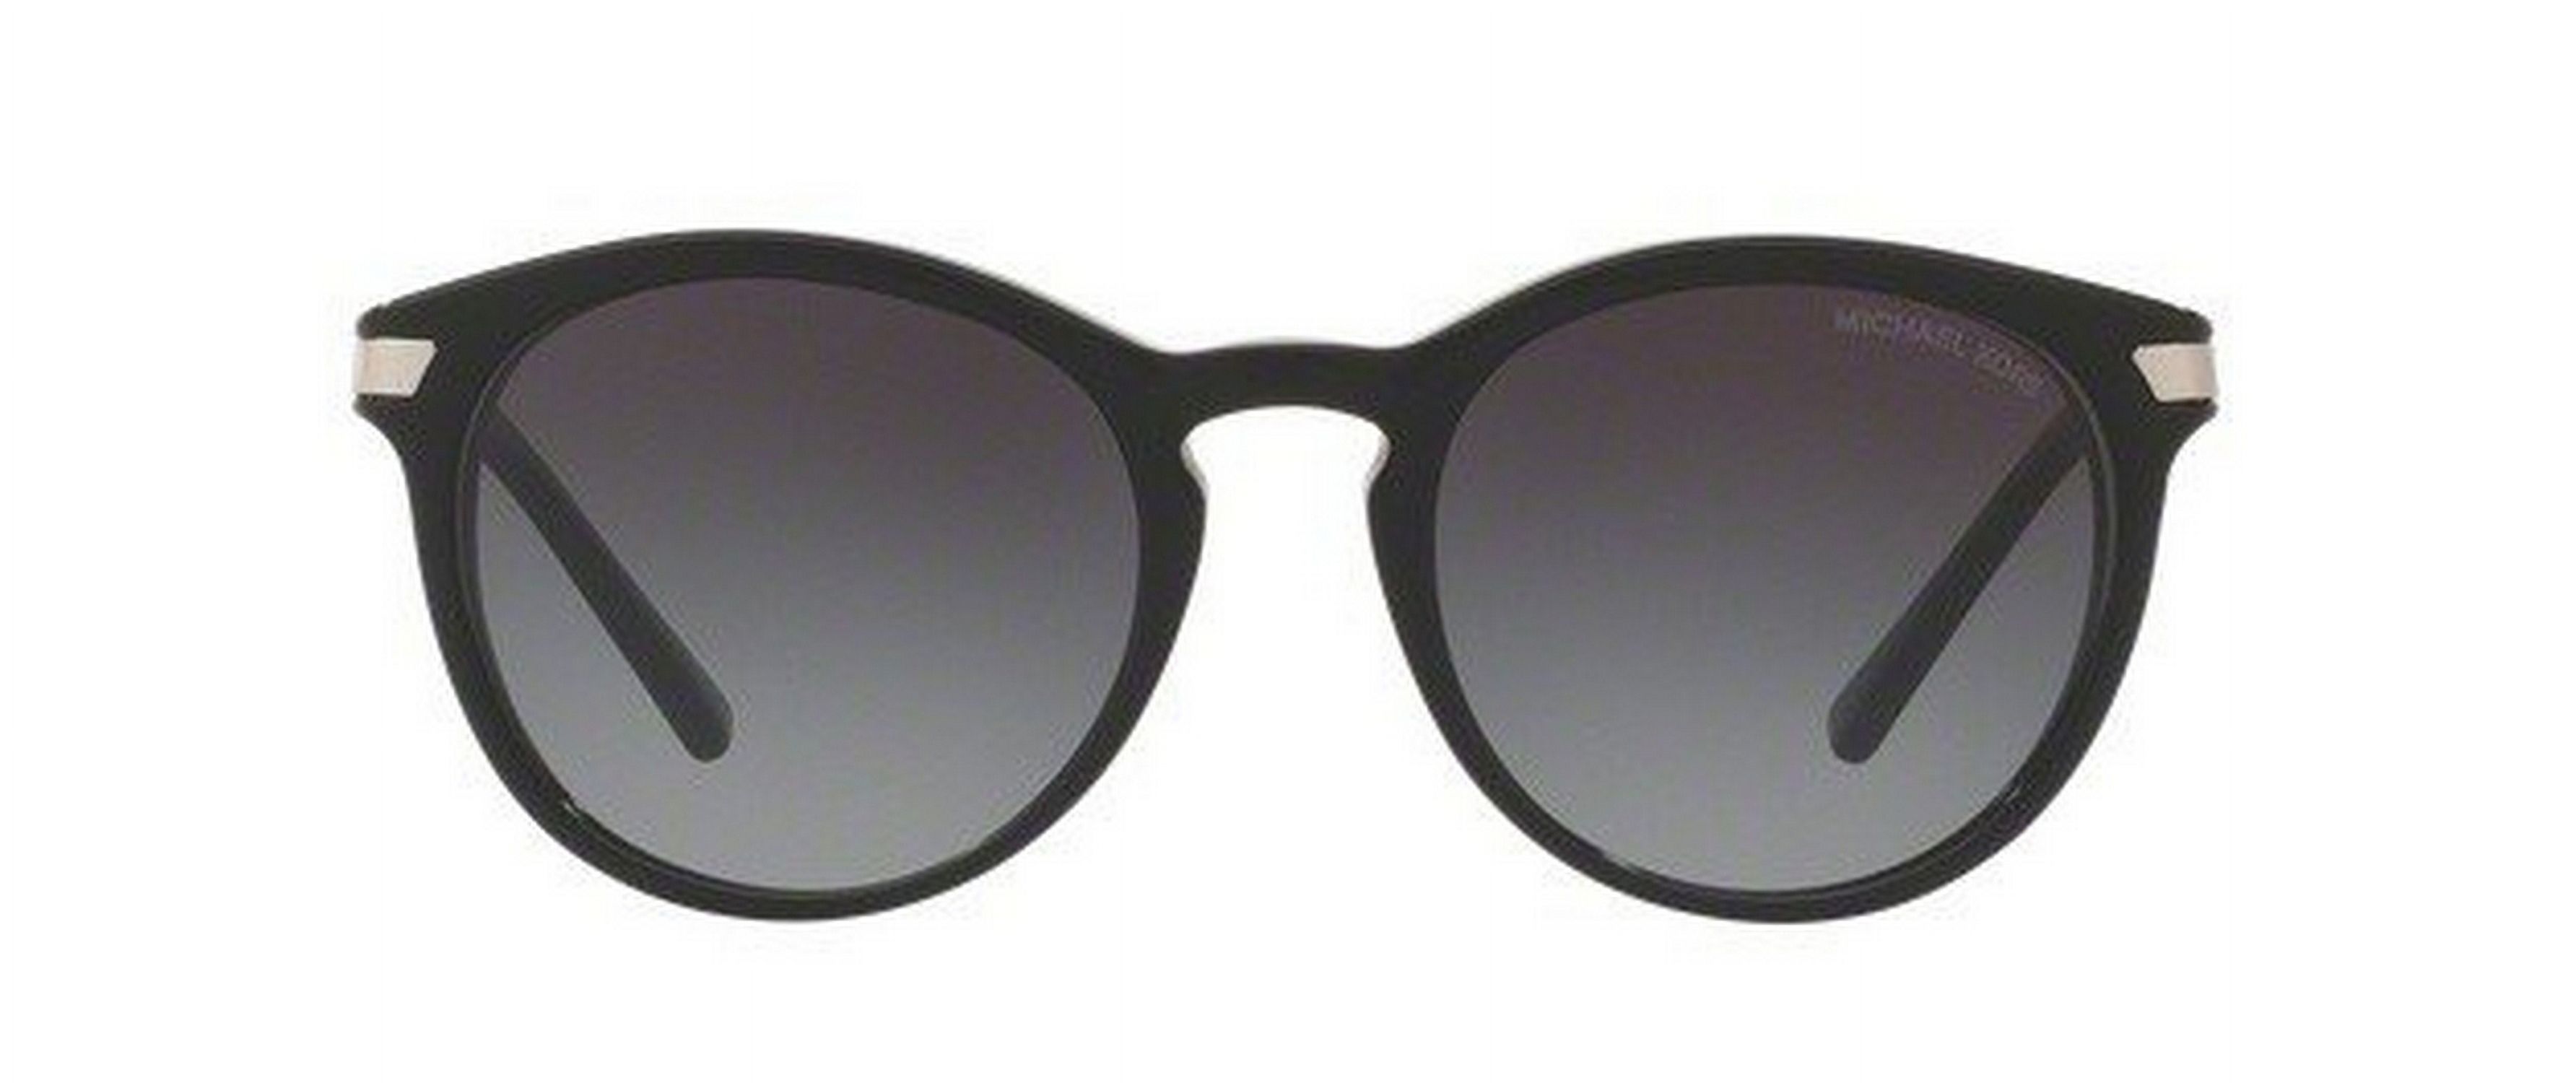 Michael Kors MK2023 Adrianna III Round Woman Sunglasses - image 2 of 3